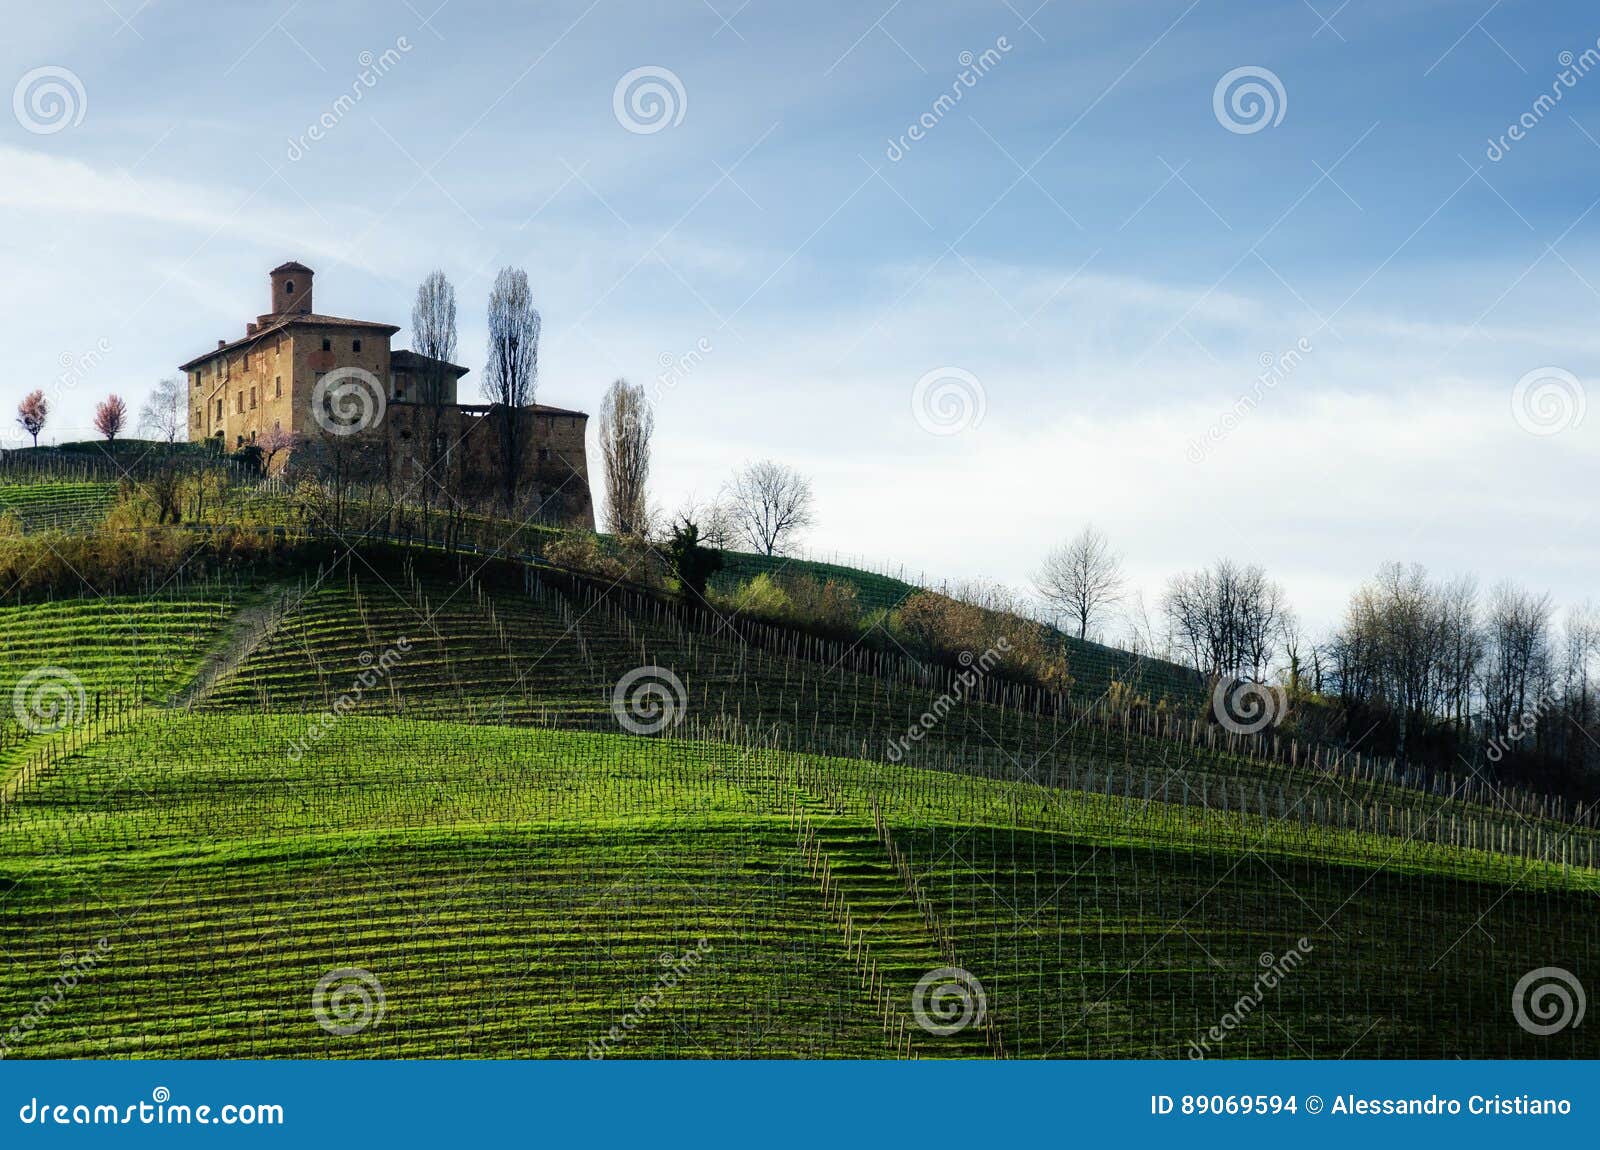 castello della volta and vineyards barolo, italy